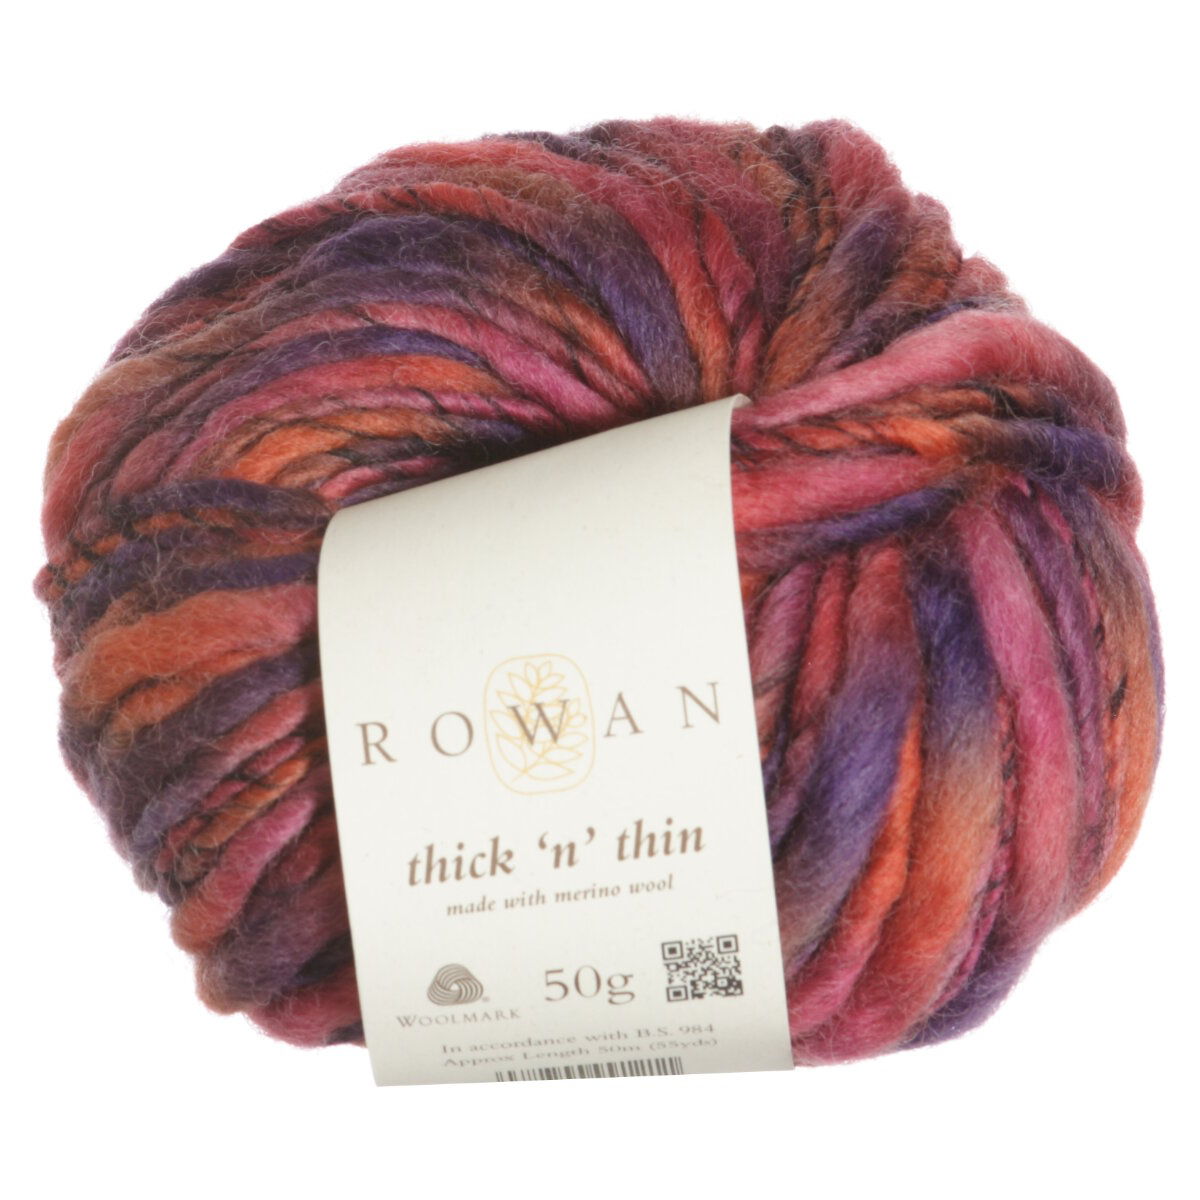 Rowan Thick 'n' Thin Yarn at Jimmy Beans Wool